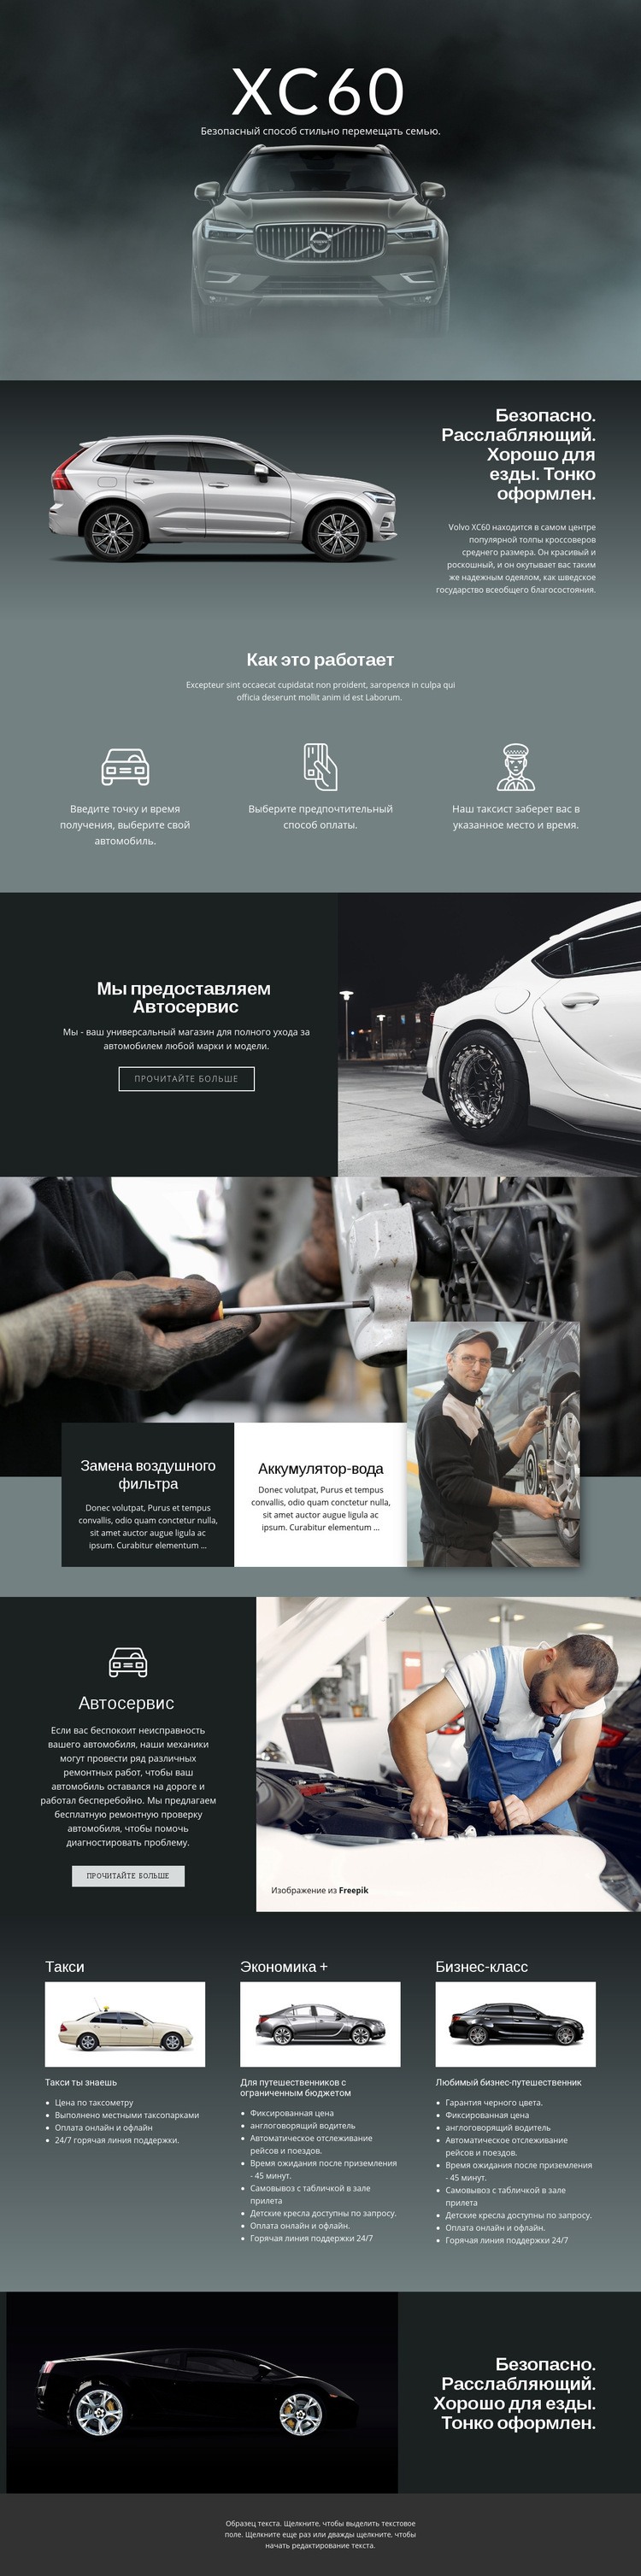 Volvo XC60 внедорожник Мокап веб-сайта